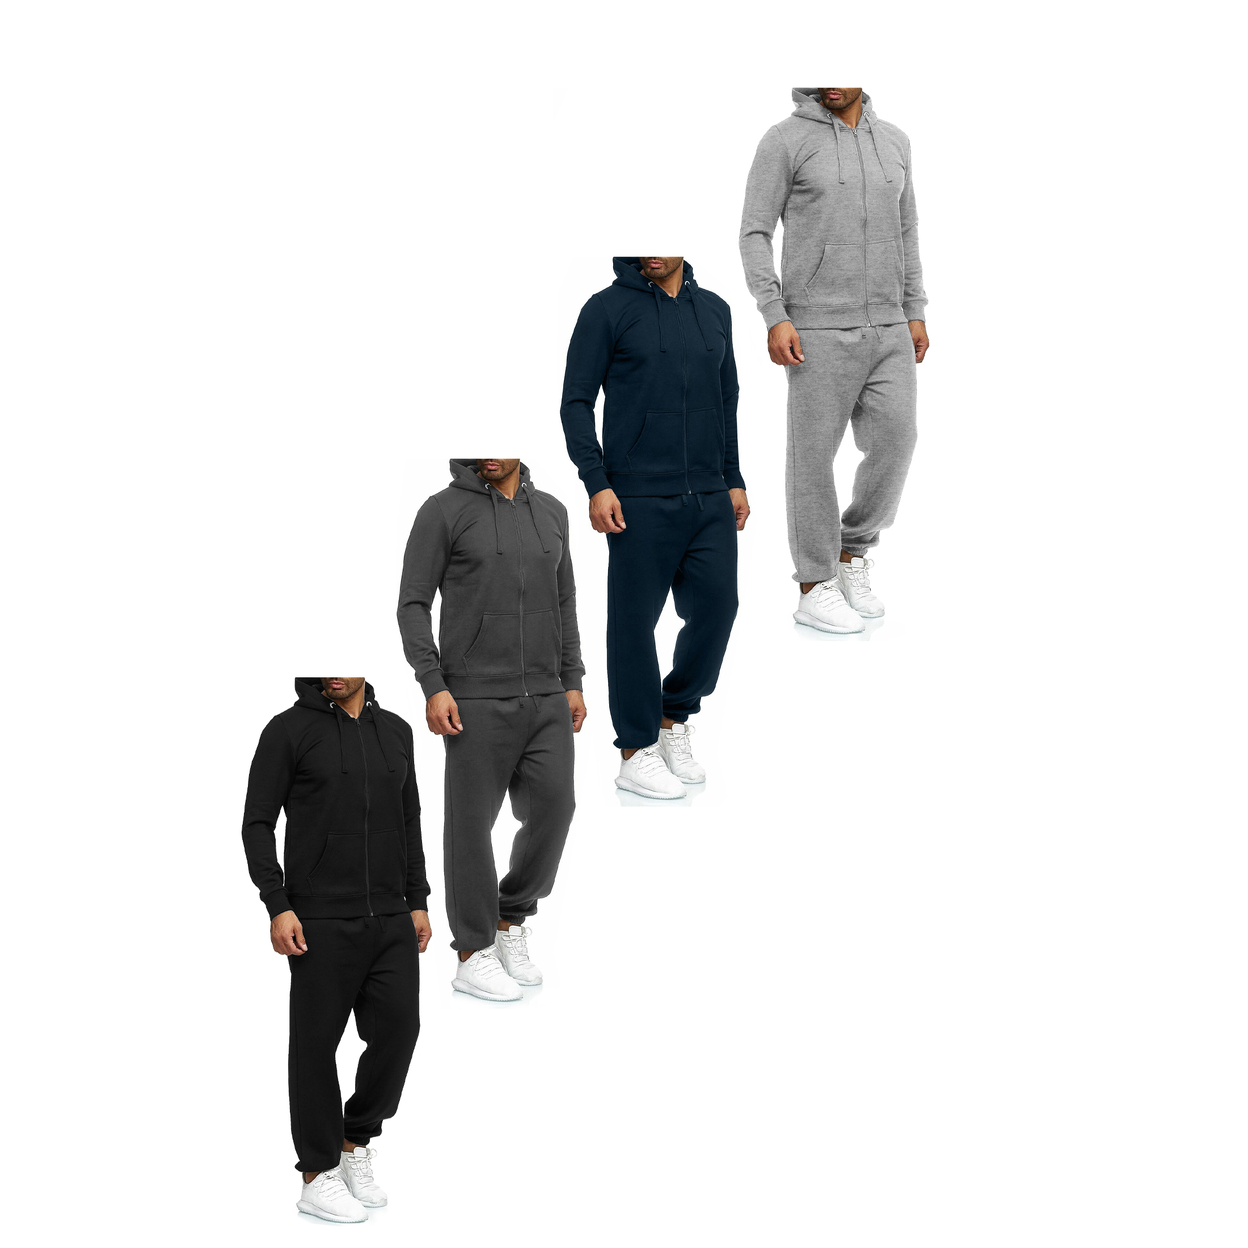 Multi-Pack: Men's Casual Big & Tall Athletic Active Winter Warm Fleece Lined Full Zip Tracksuit Jogger Set - Black, 1-pack, Medium